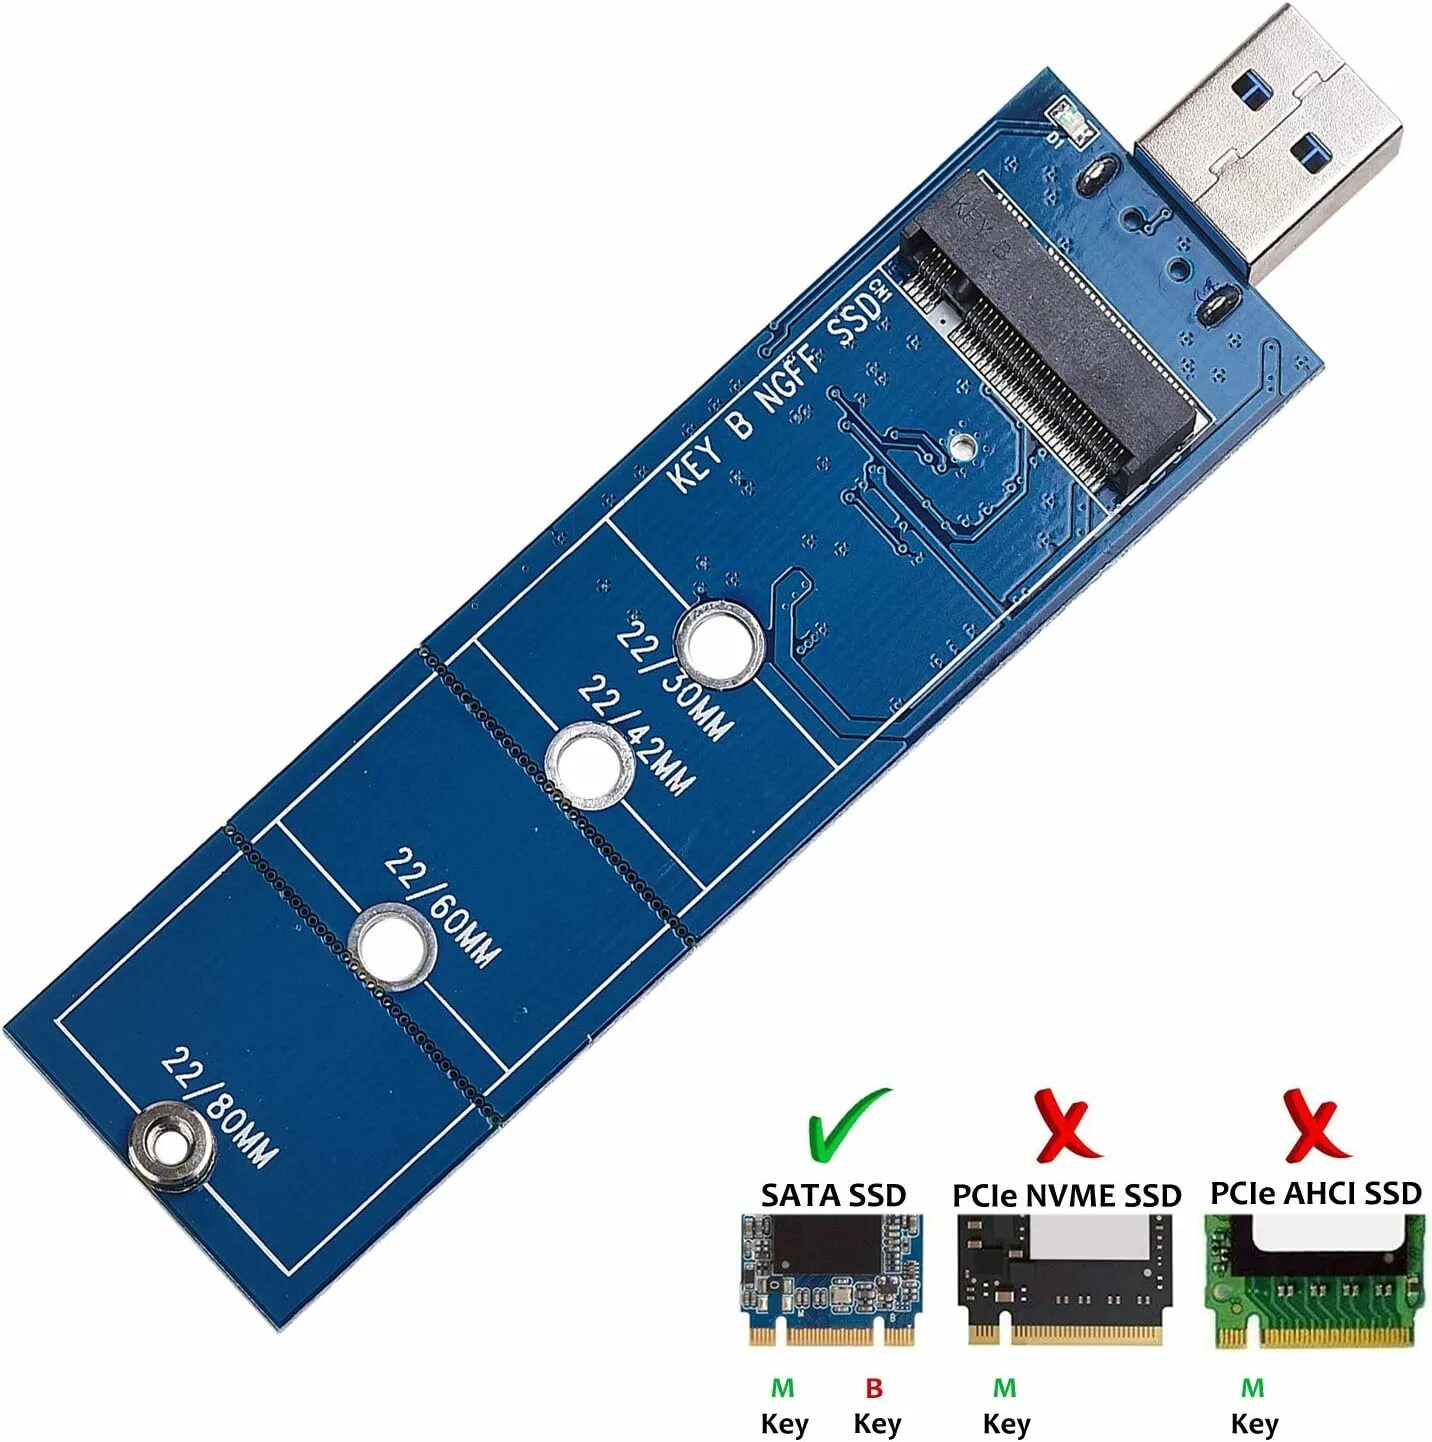 USB SSD m2. USB m2 SATA Adapter. Адаптер USB to m.2 NVME. Адаптер ссд м2 на USB. Купить m2 адаптер